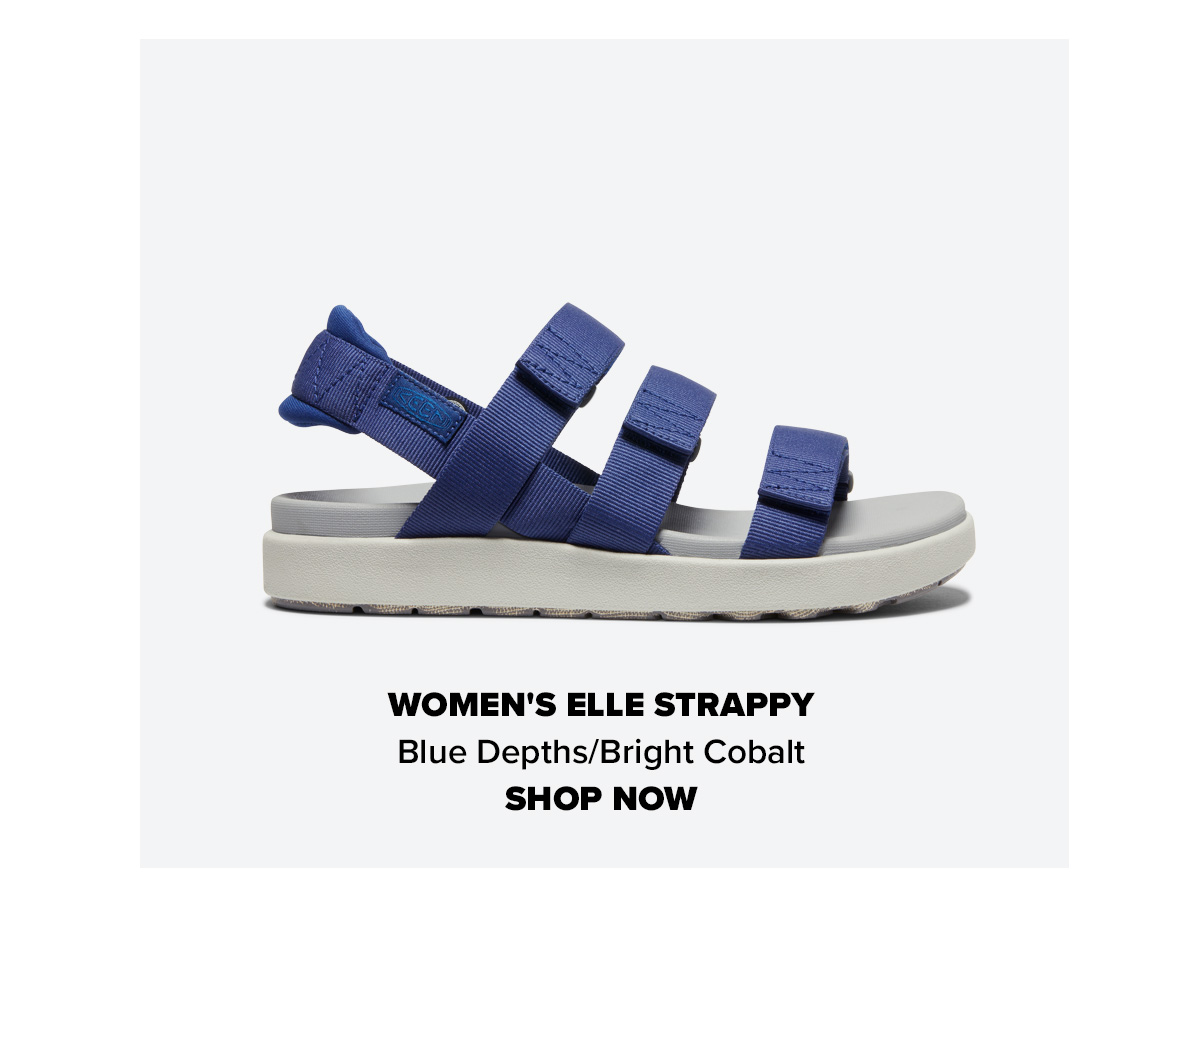 Women's Elle Strappy Sandals